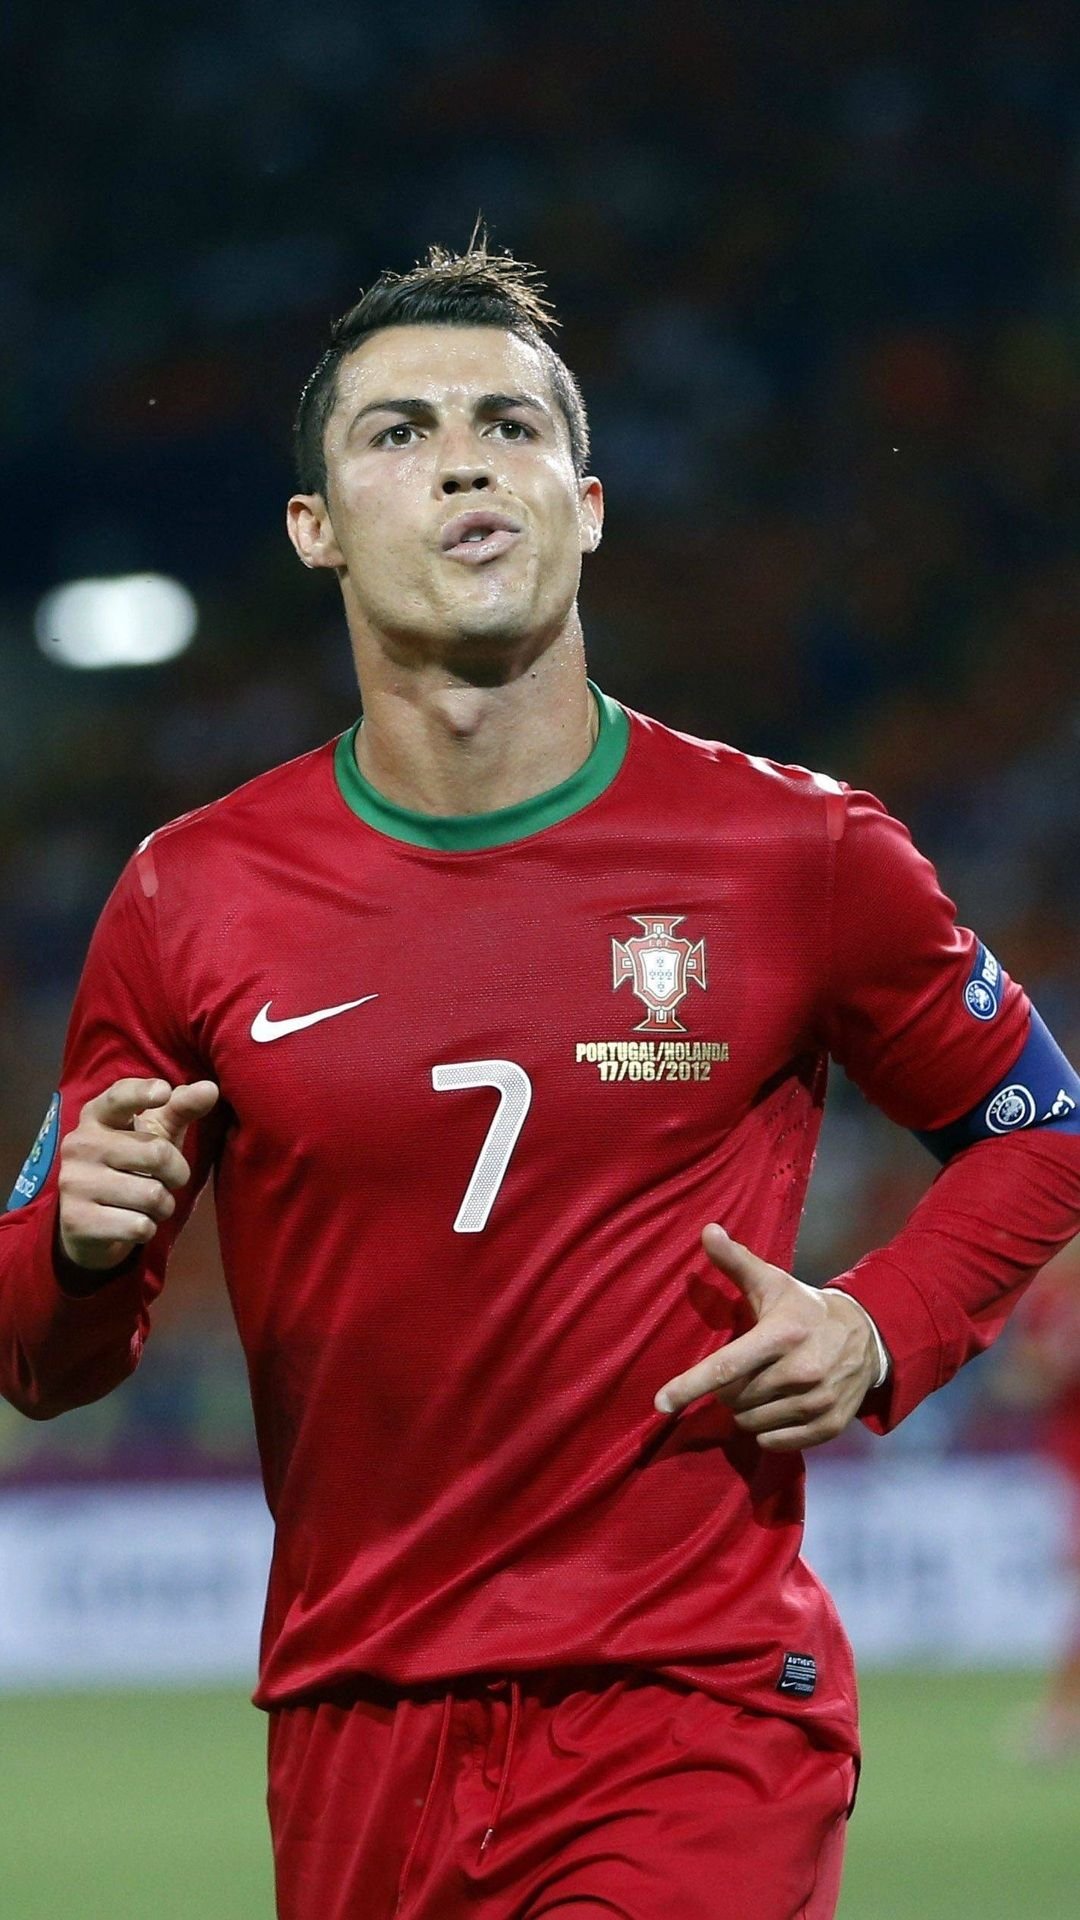 Cristiano Ronaldo football player Wallpaper Download | MobCup